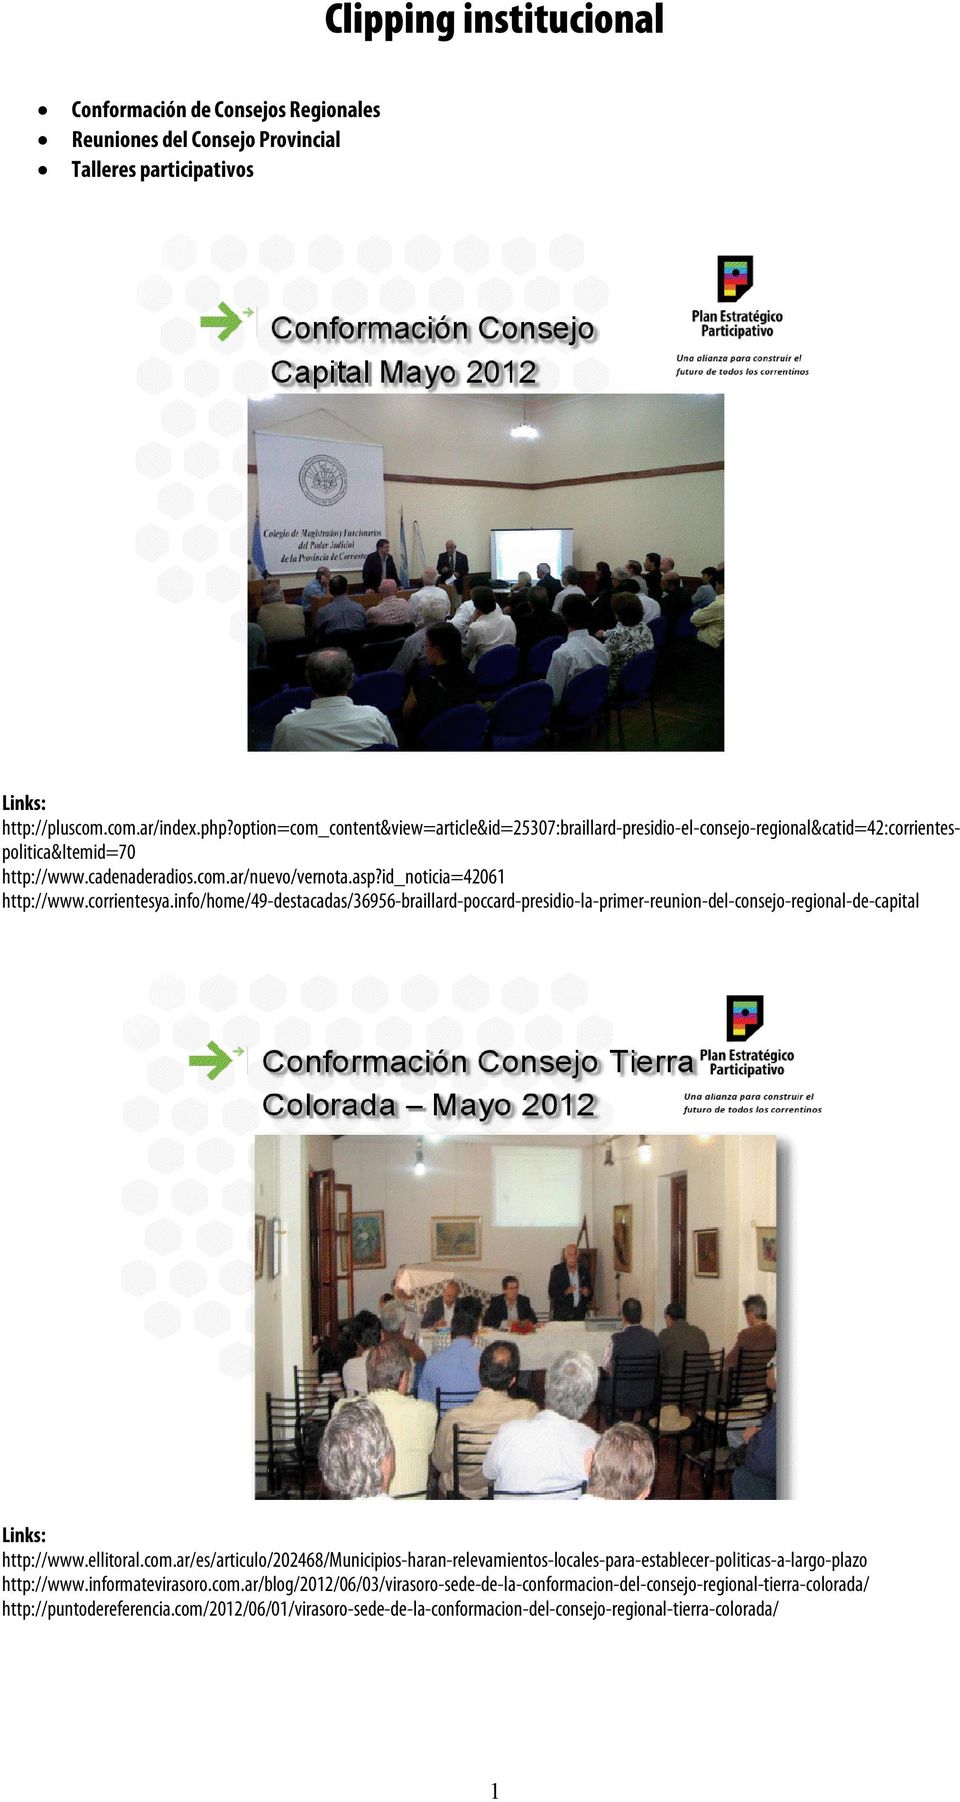 corrientesya.info/home/49-destacadas/36956-braillard-poccard-presidio-la-primer-reunion-del-consejo-regional-de-capital http://www.ellitoral.com.